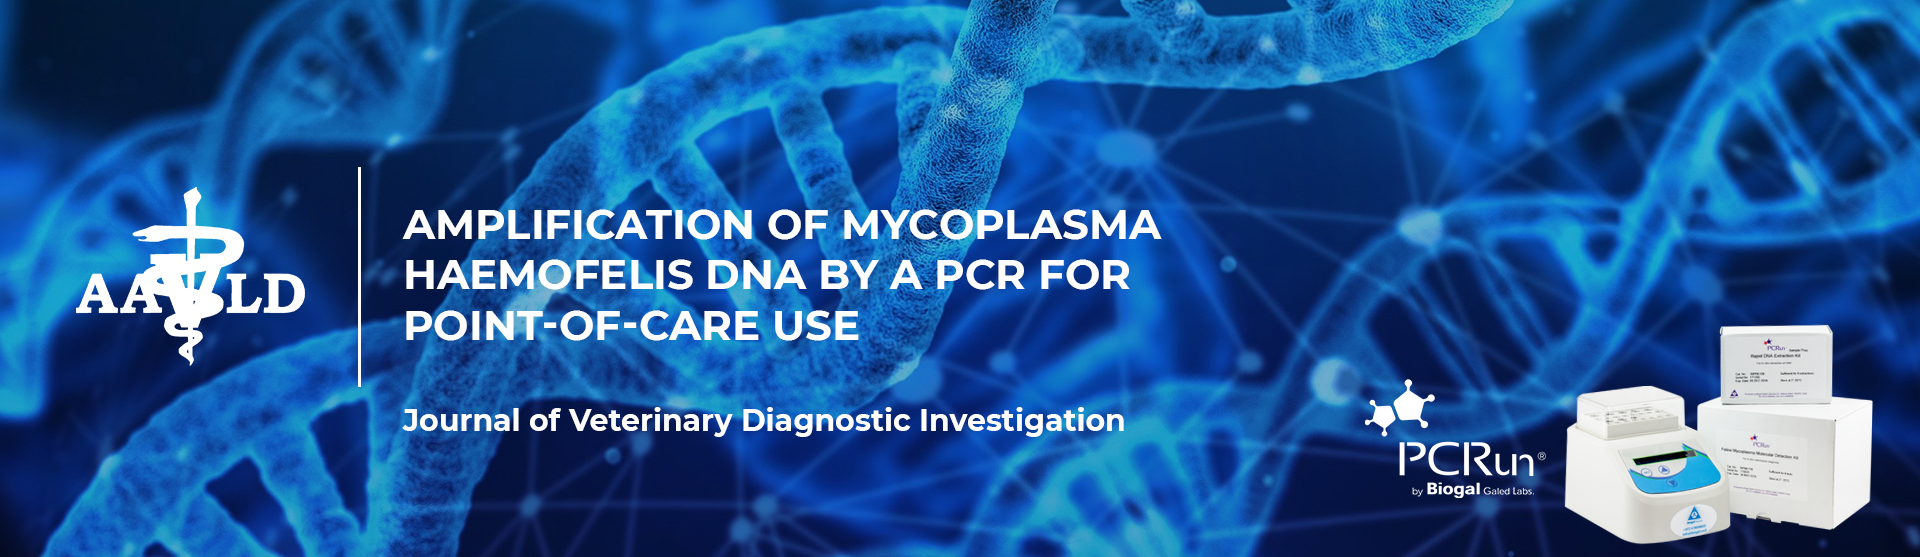 Amplification of Mycoplasma